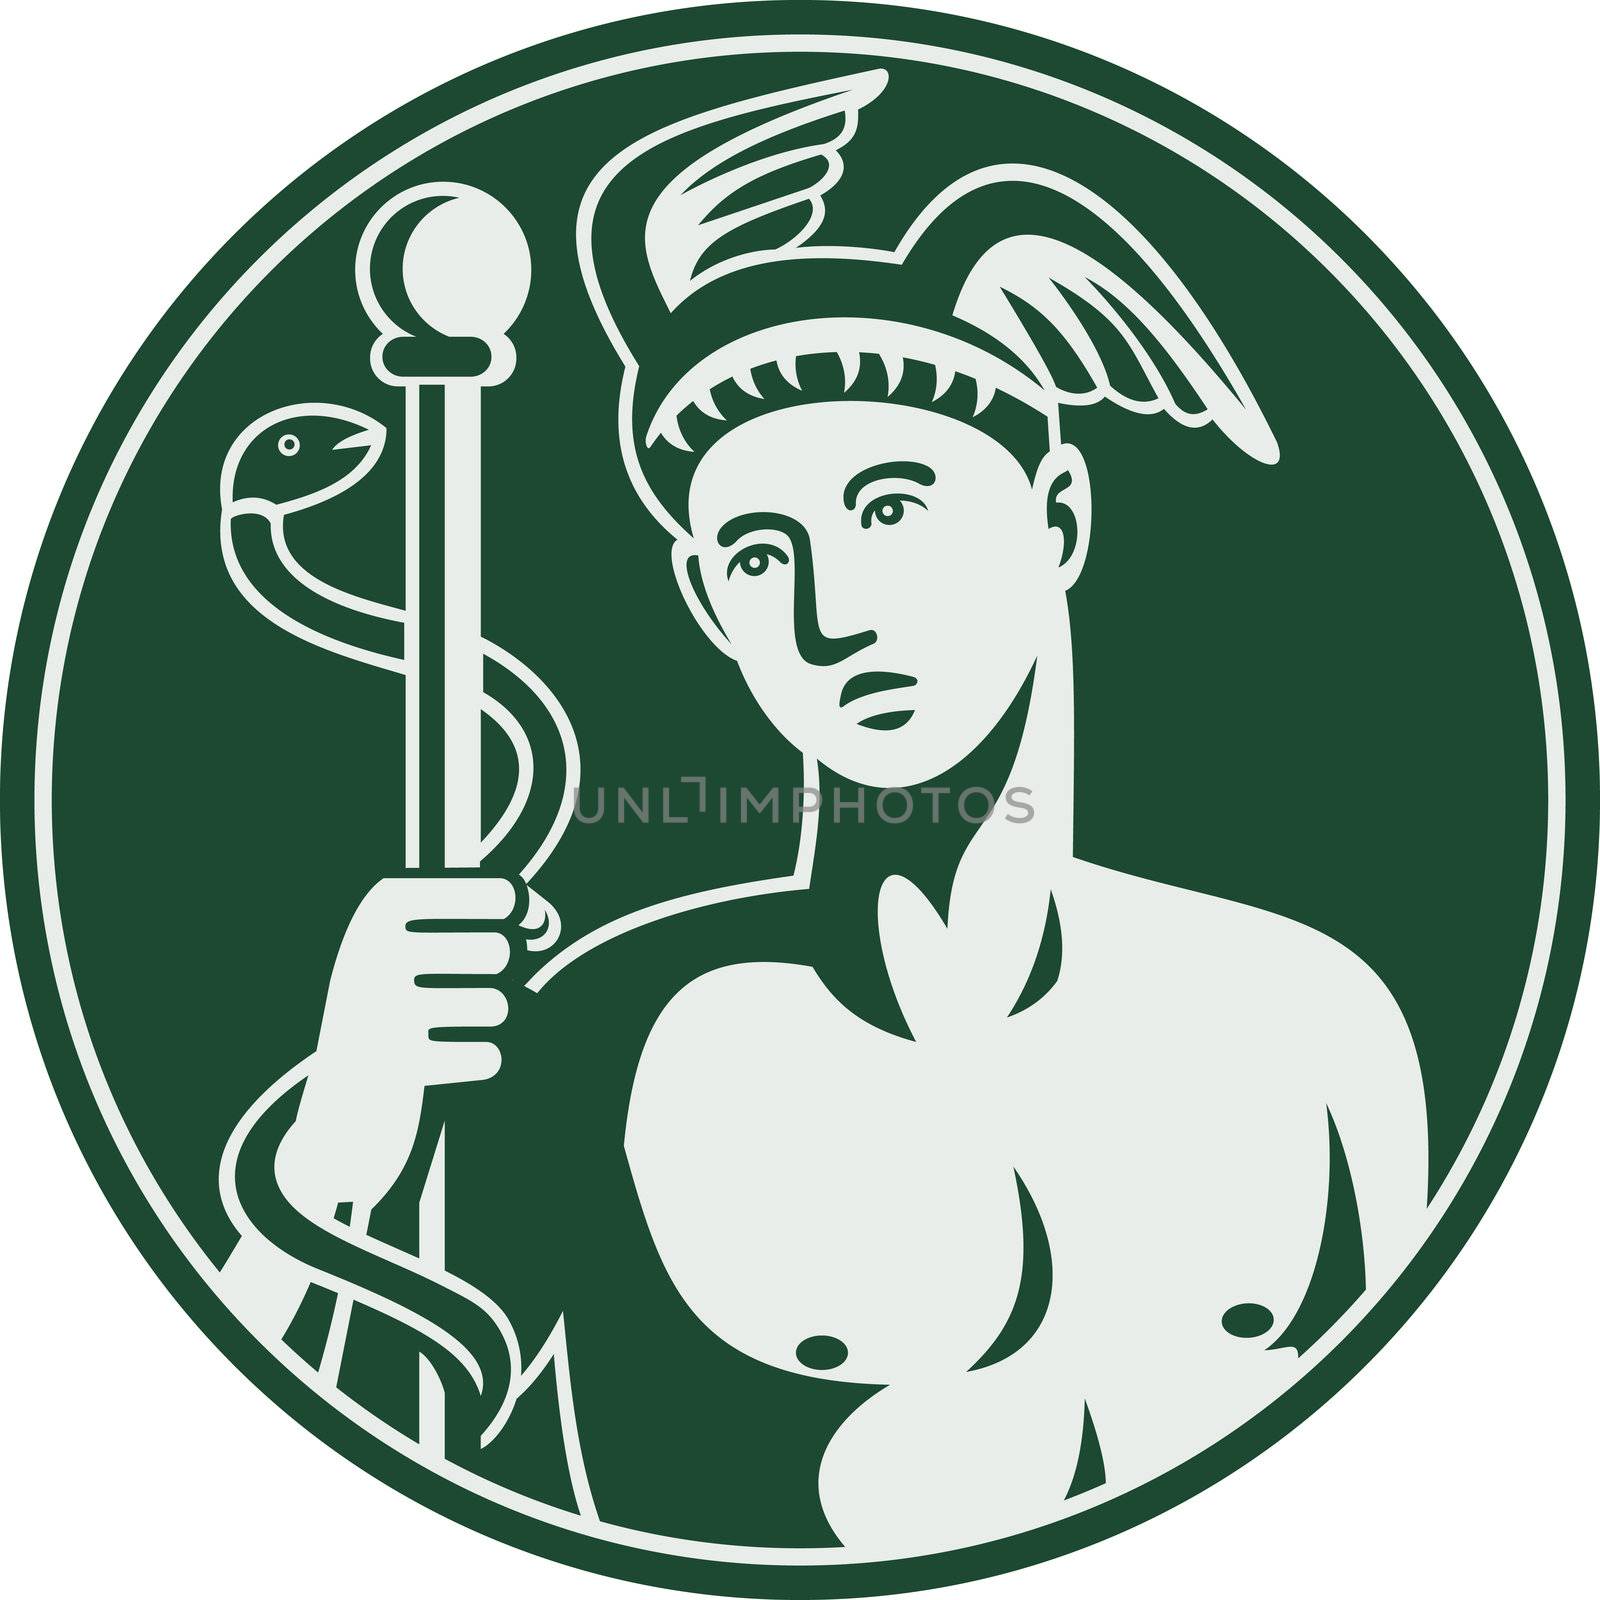 Greek God Hermes holding a caduceus  by patrimonio